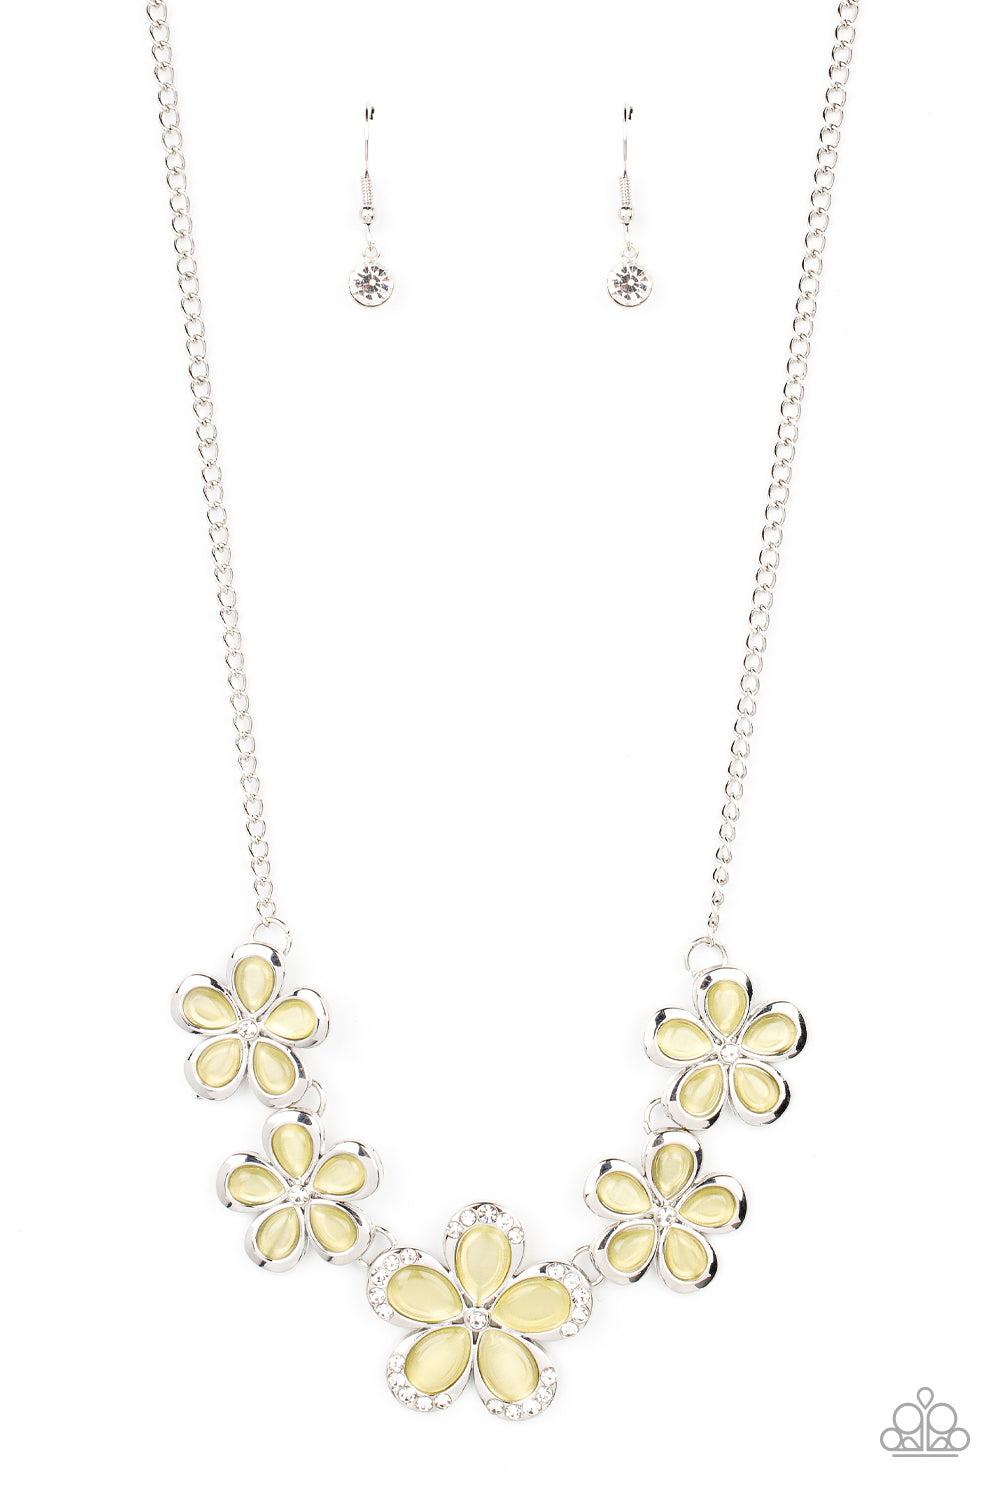 Garden Daydream Yellow Cat's Eye Stone Flower Necklace - Paparazzi Accessories- lightbox - CarasShop.com - $5 Jewelry by Cara Jewels